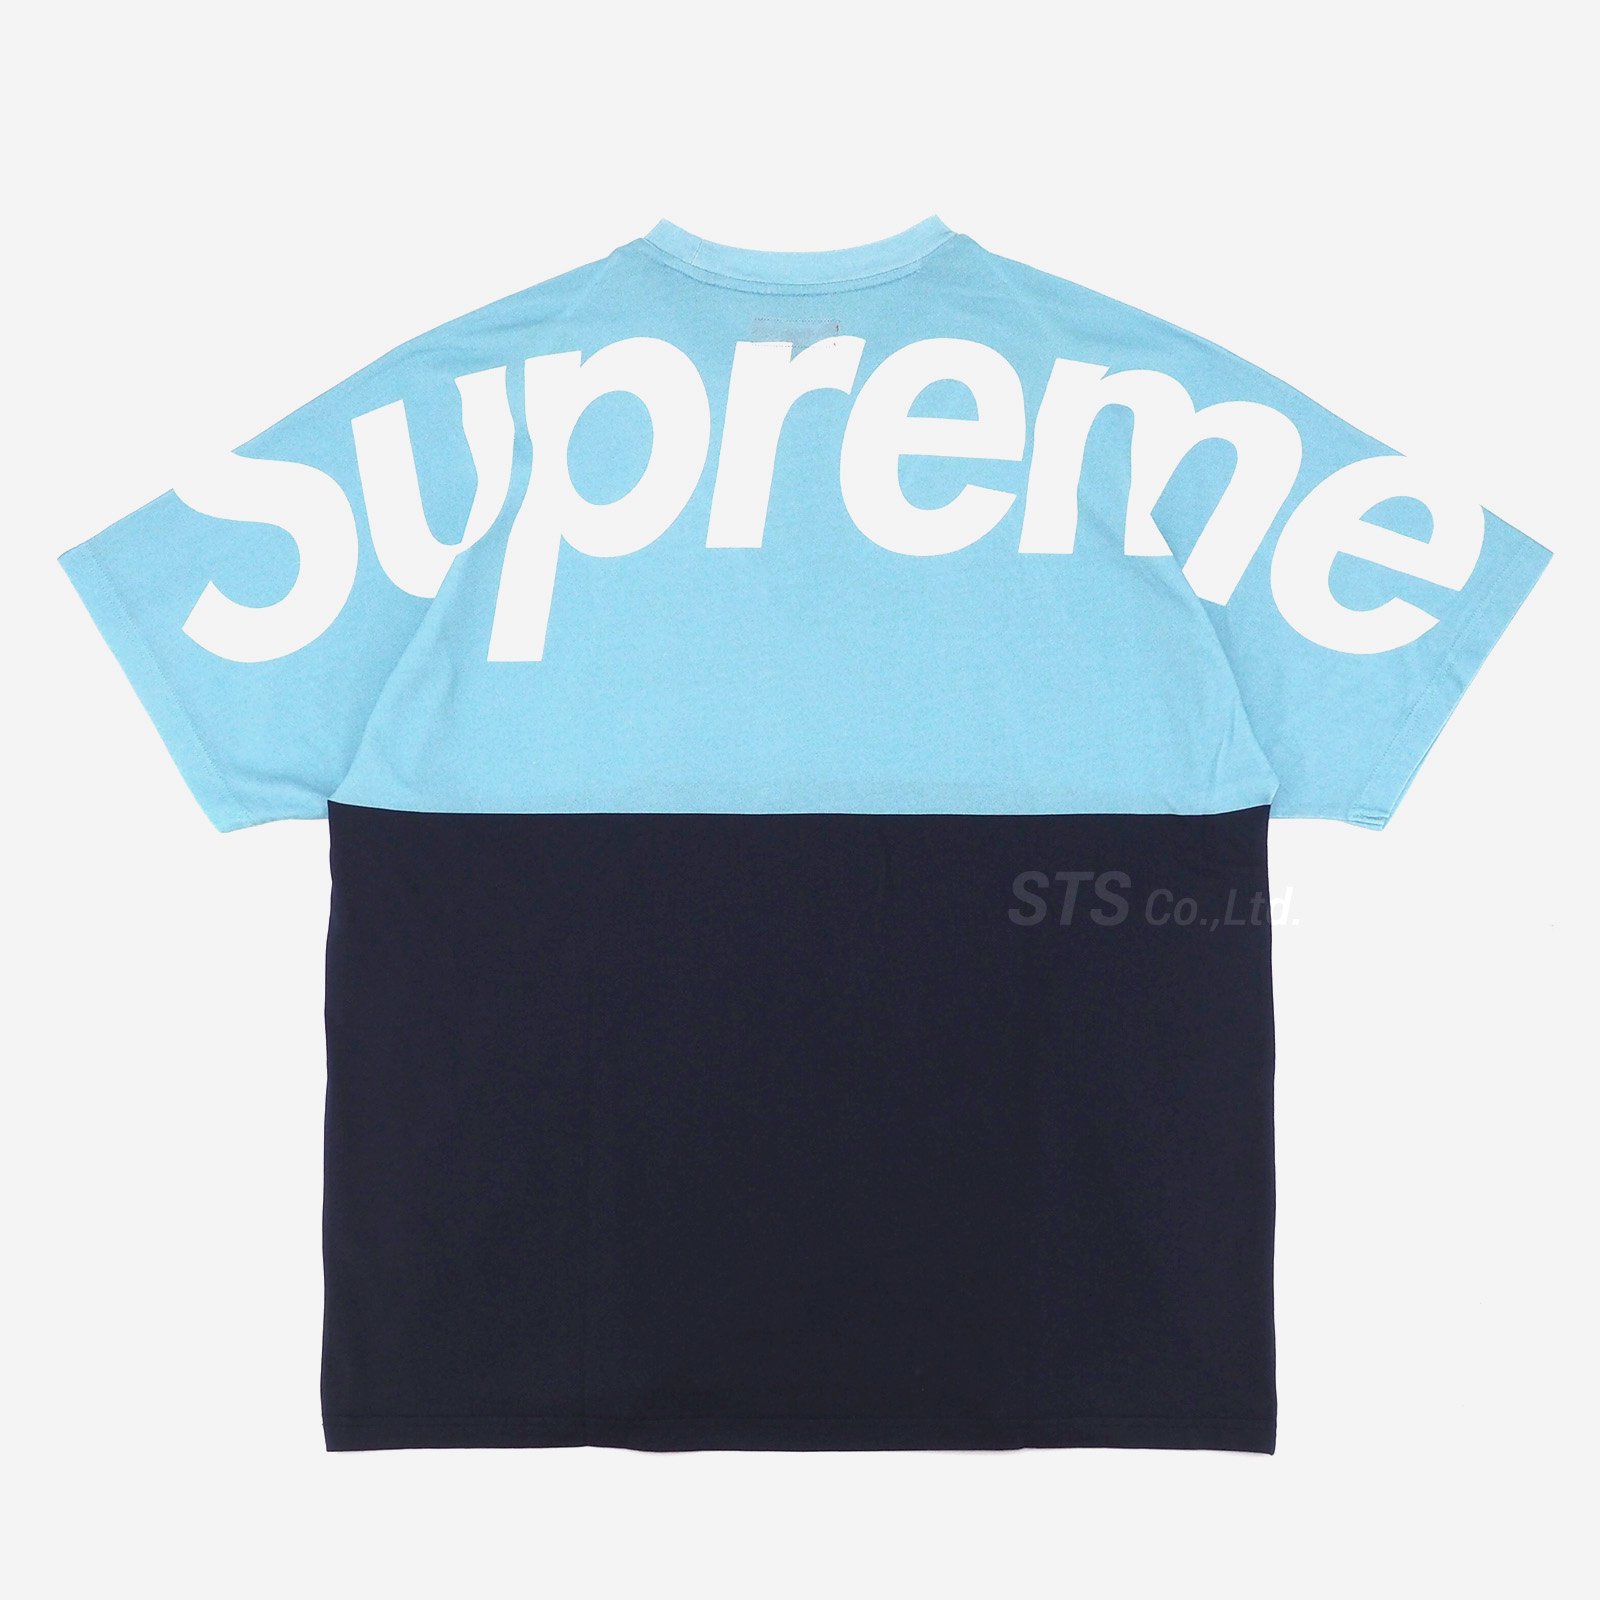 Tシャツ/カットソー(半袖/袖なし)Supreme Split S/S Top Blue Lサイズ